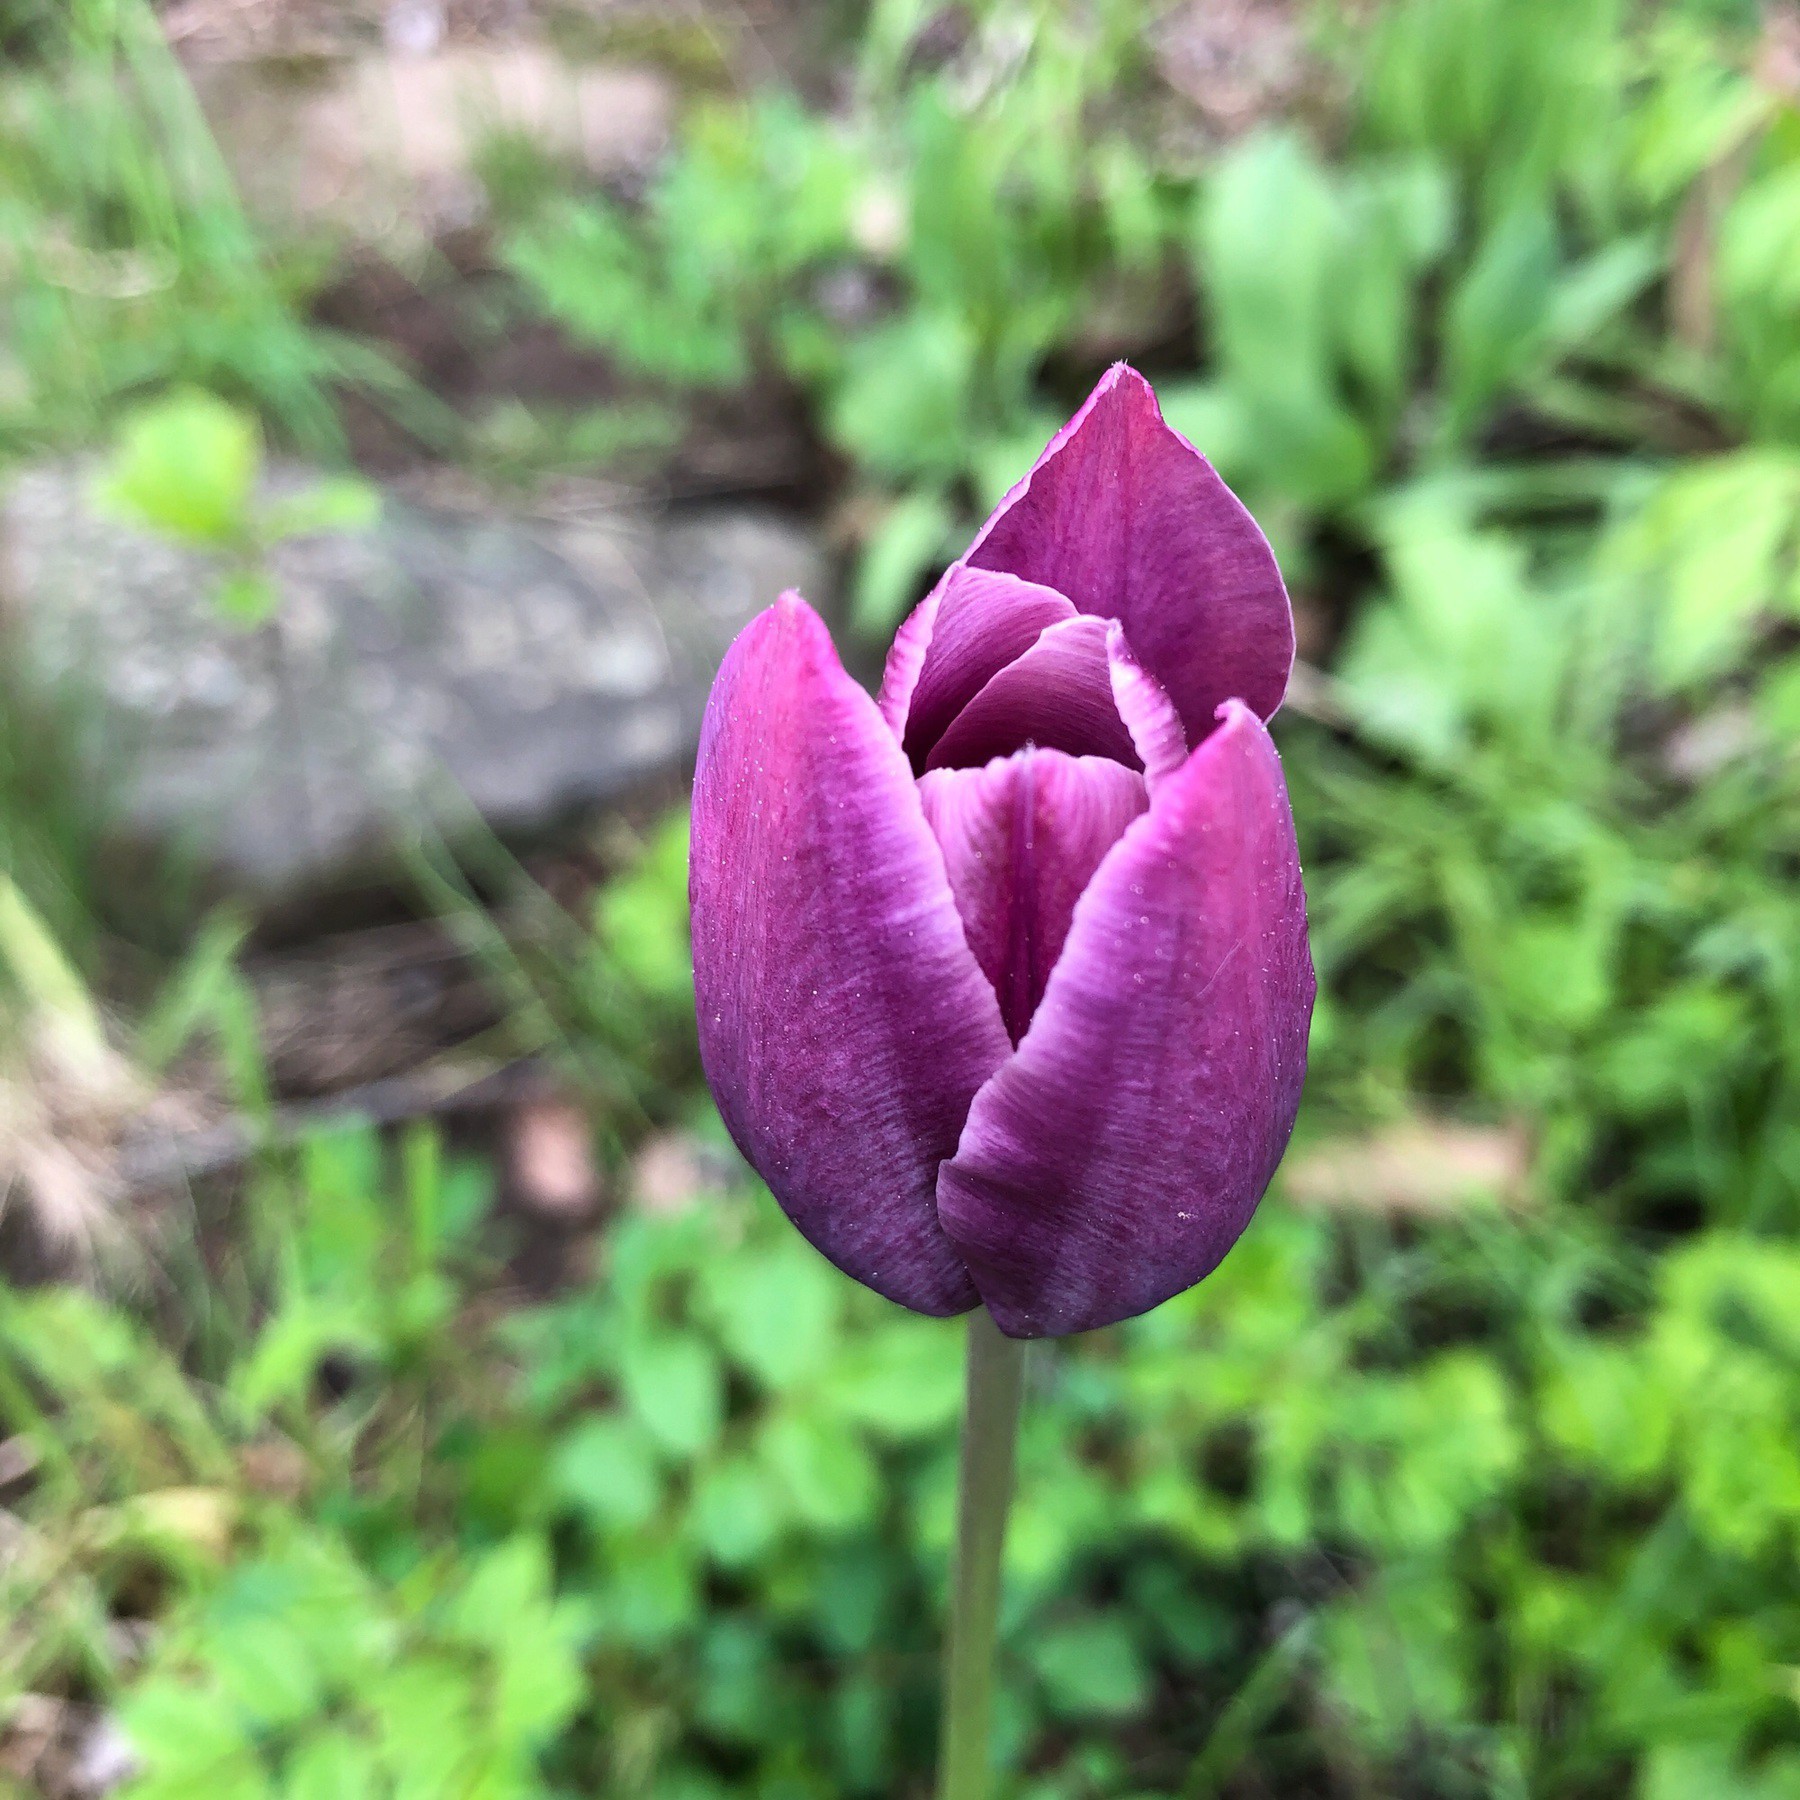 Tulip flower starting to open